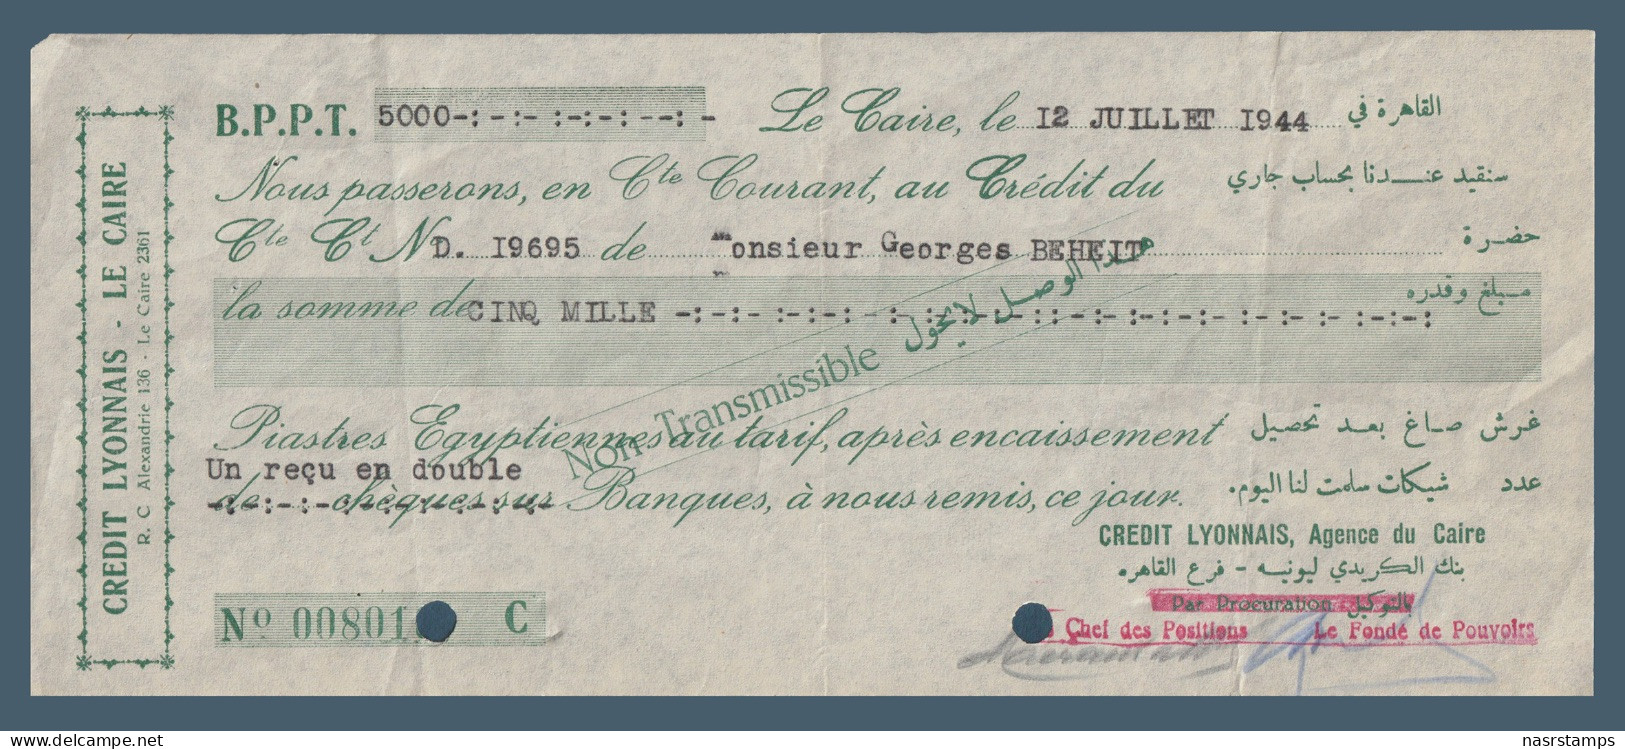 Egypt - 1944 - Vintage Check - ( Credit Lyonnais Bank - Cairo ) - Cheques & Traverler's Cheques